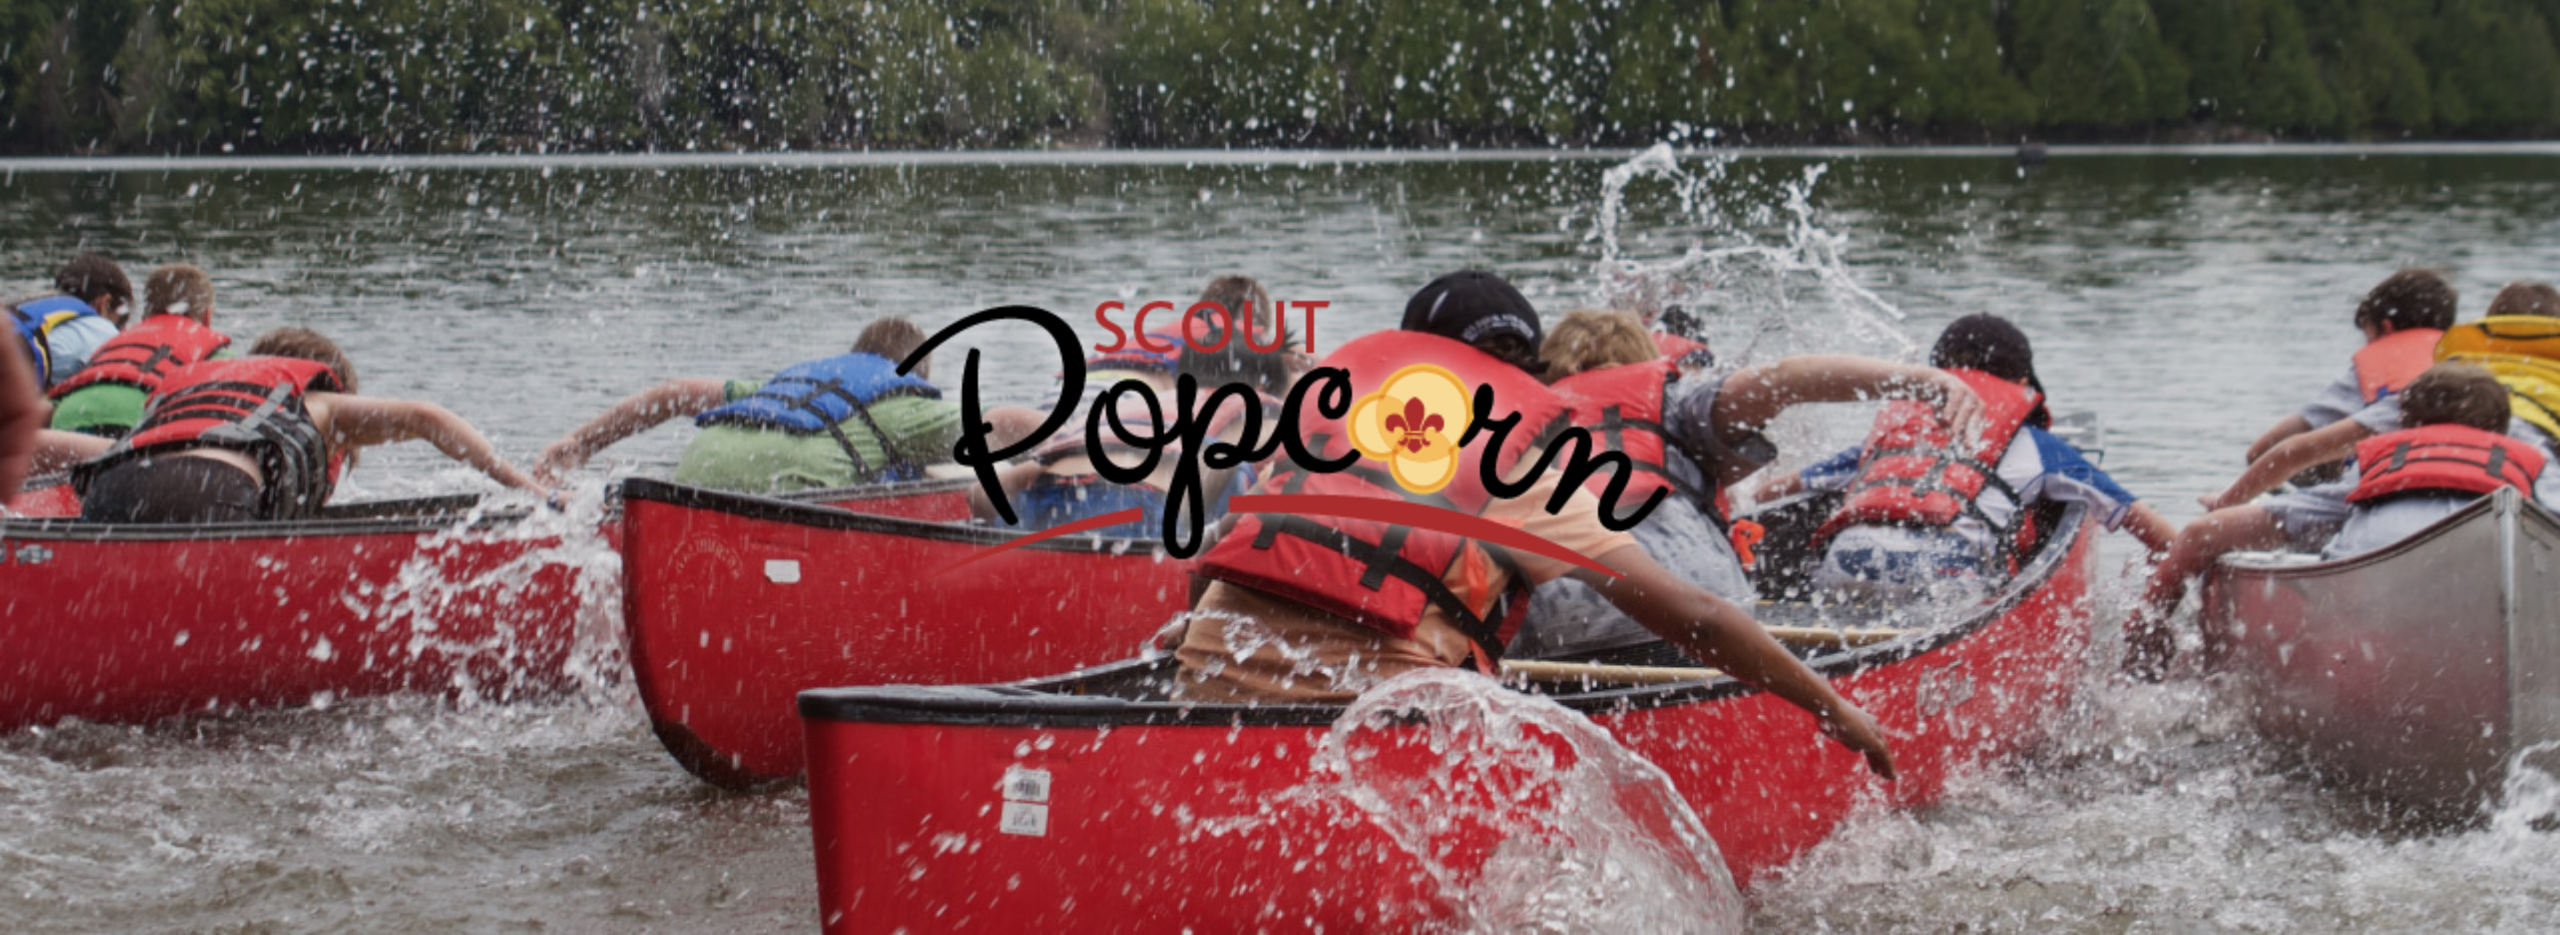 Scouts Canada Popcorn